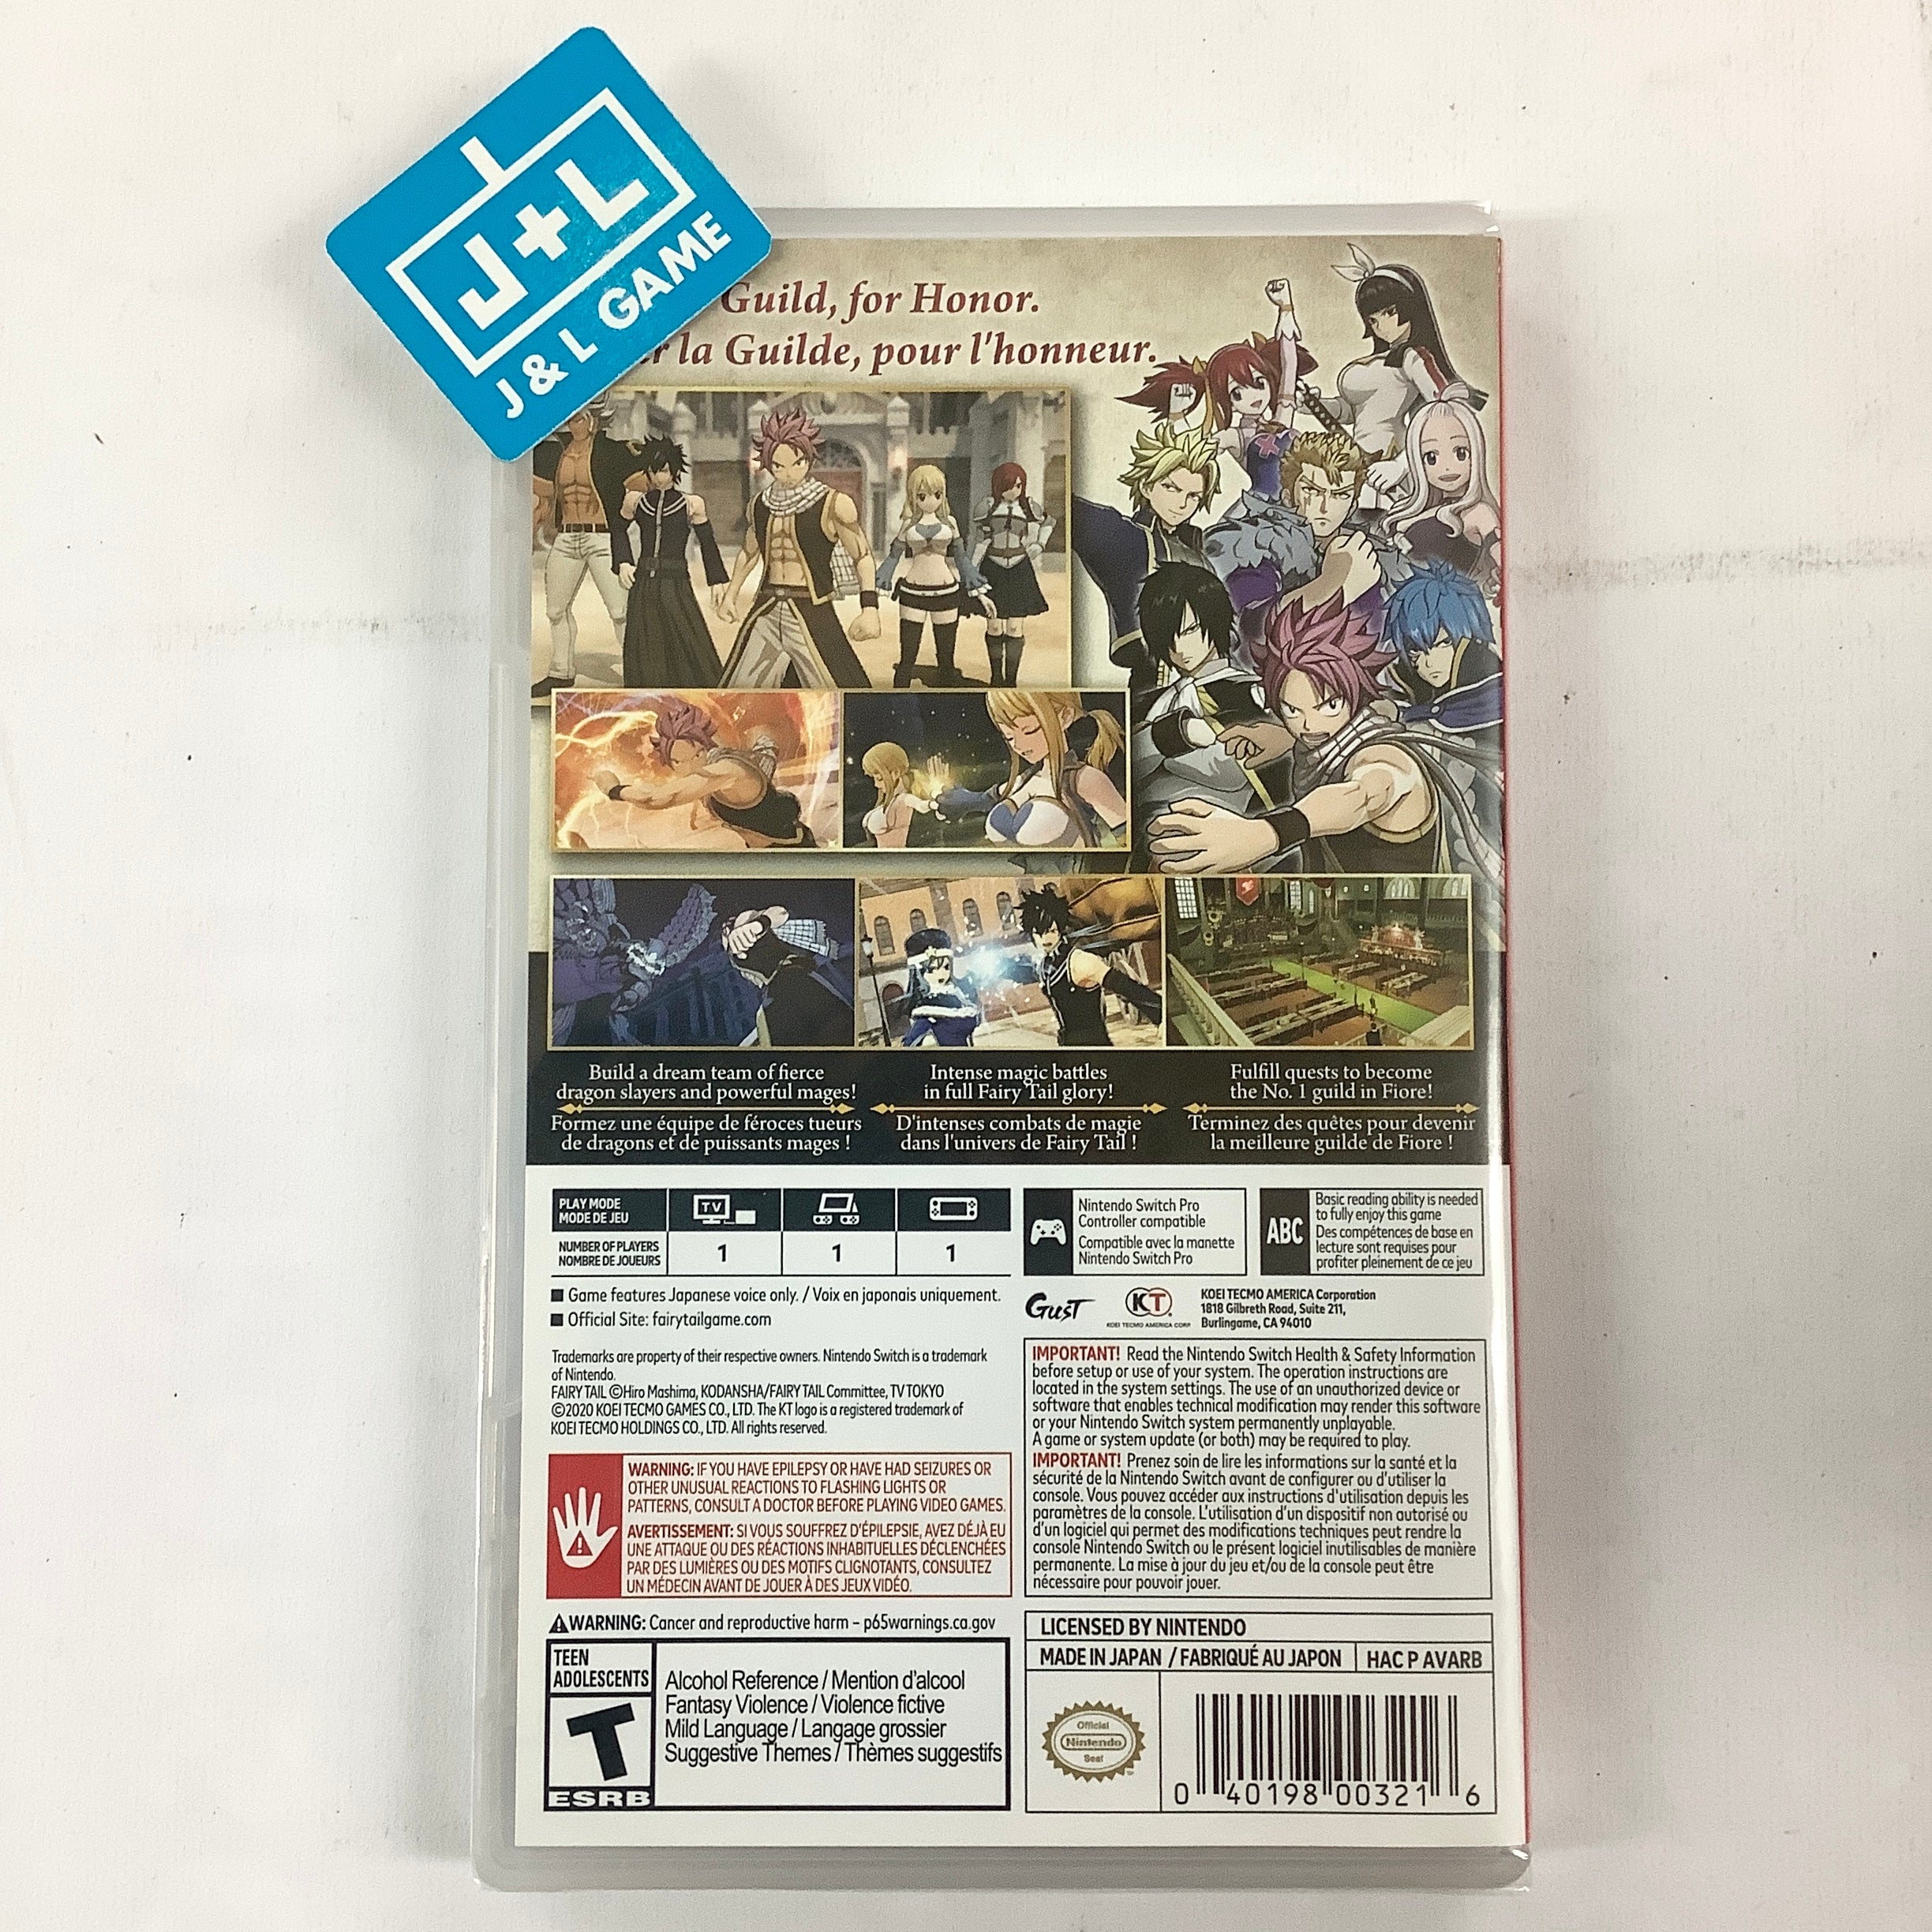 Fairy Tail - (NSW) Nintendo Switch Video Games Koei Tecmo Games   